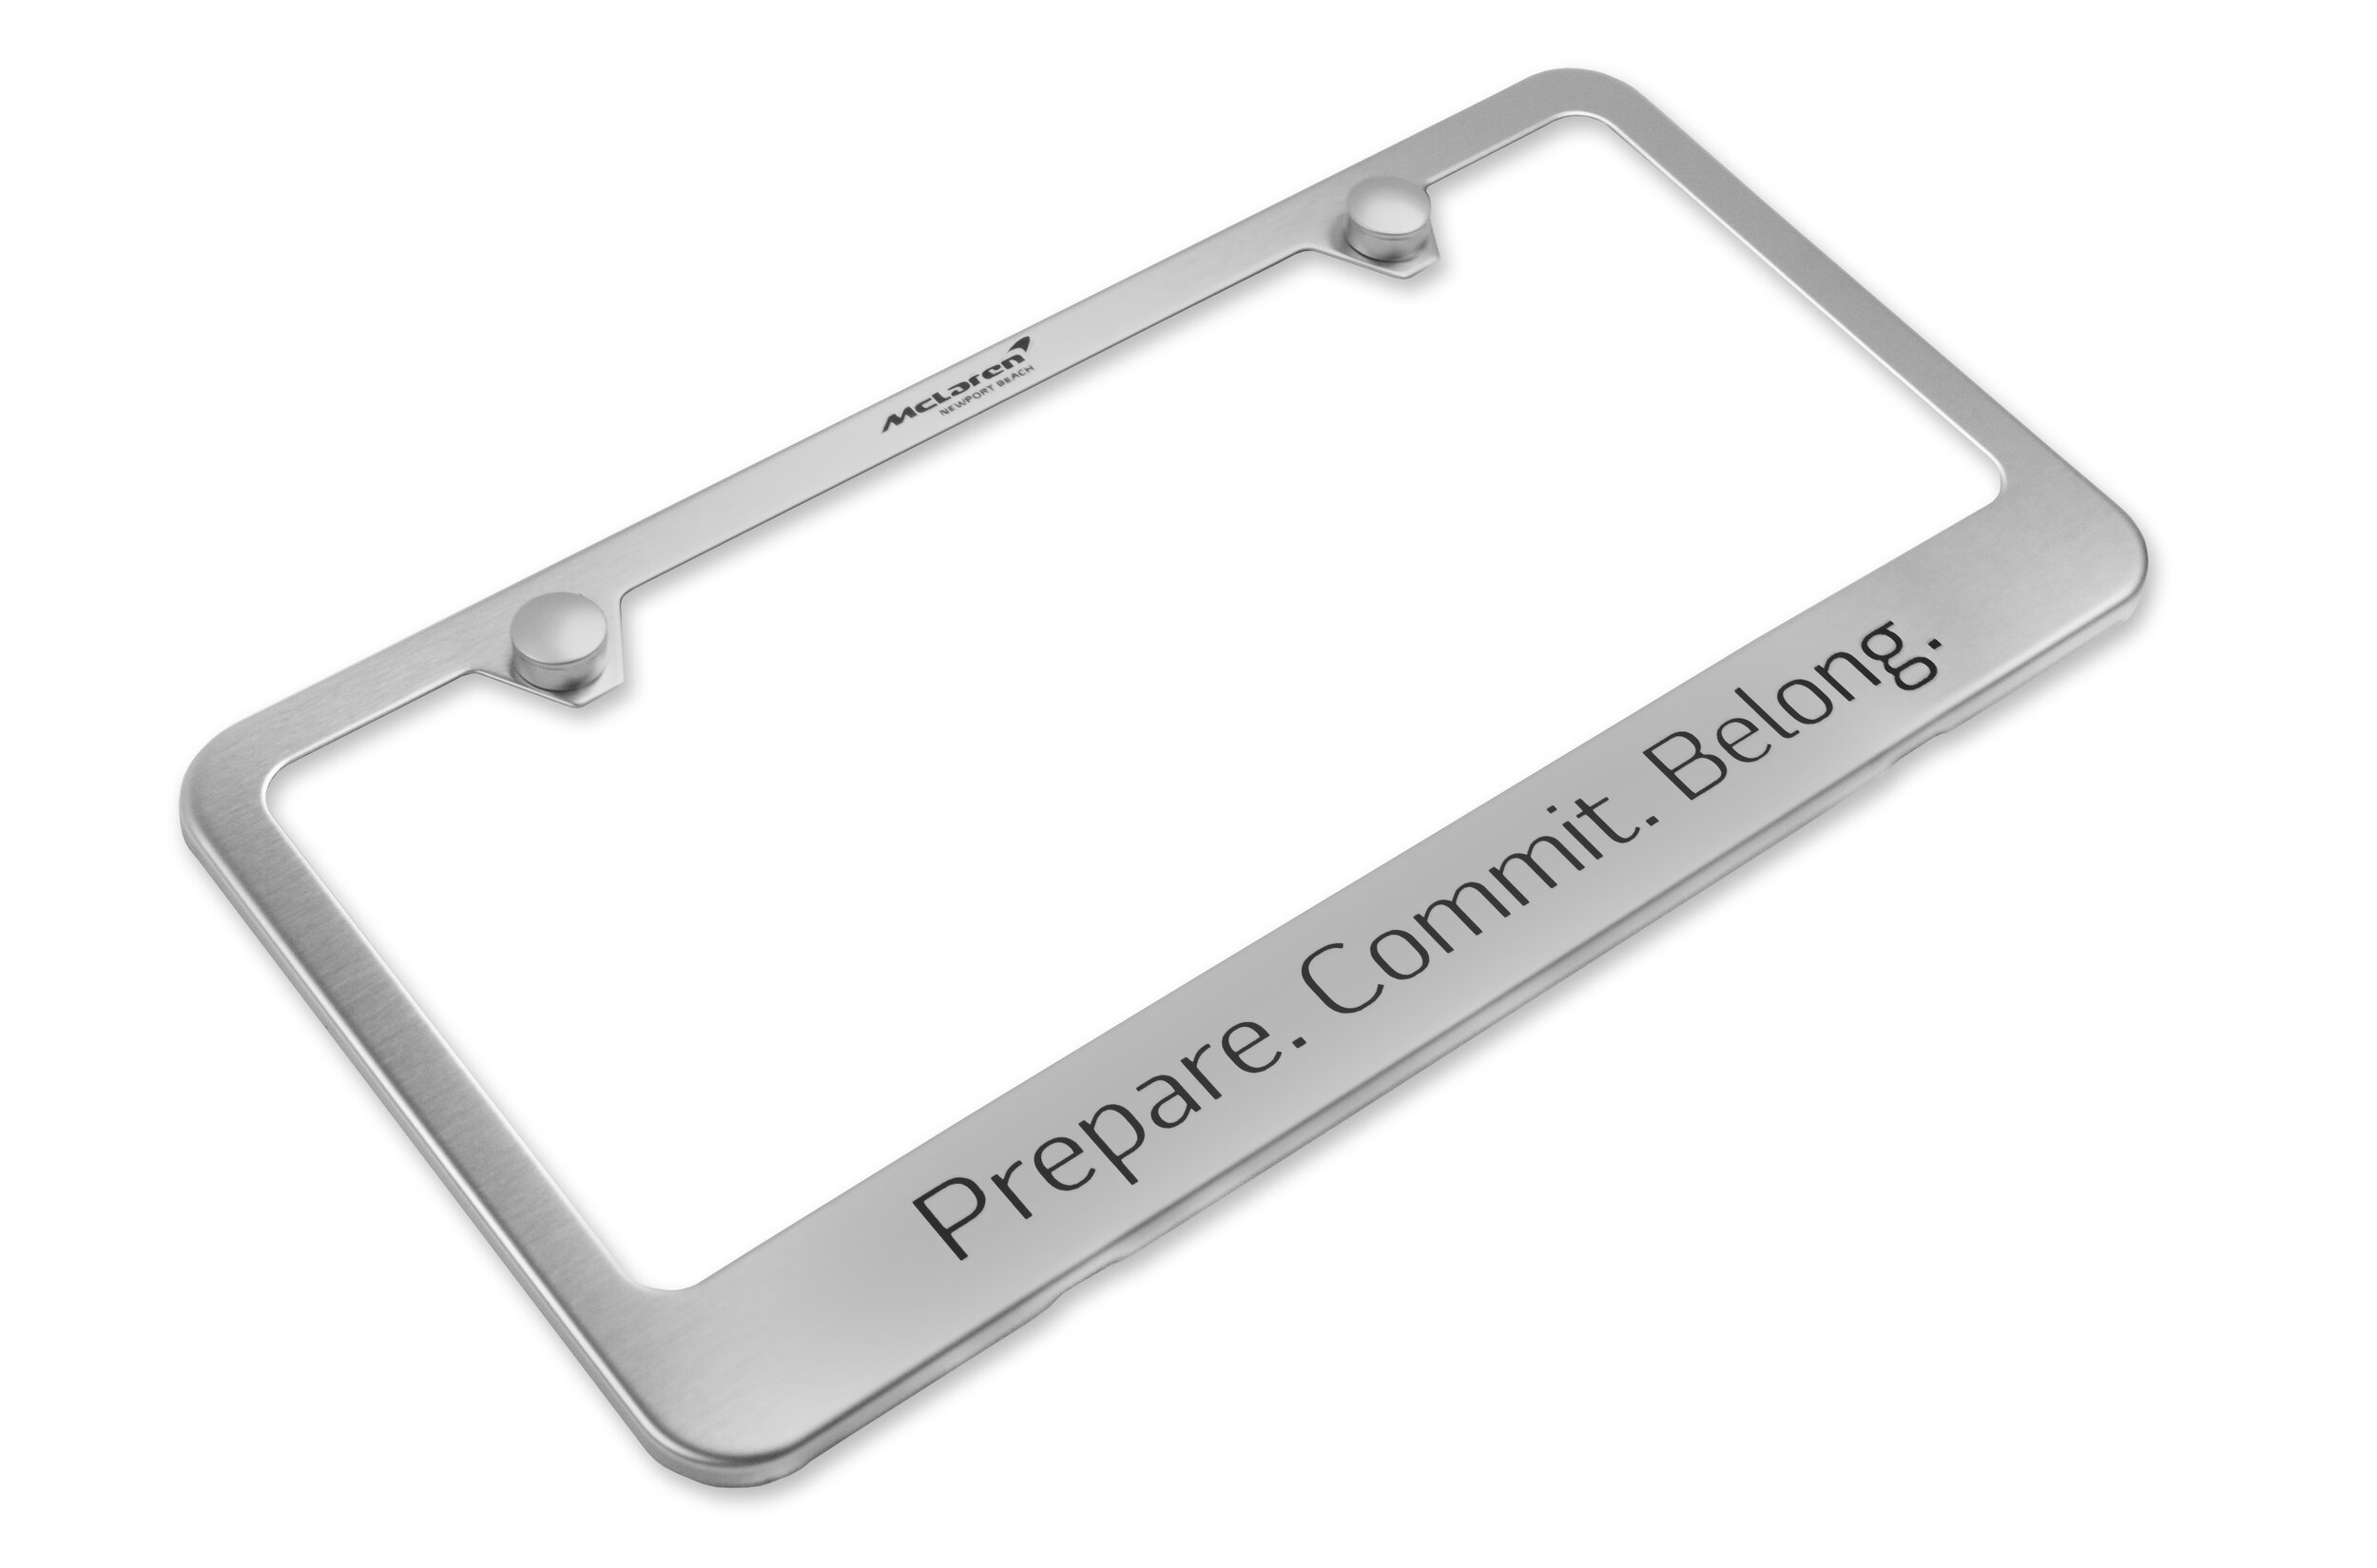 Genuine Carbon Fiber License Plate Frame | Camisasca Automotive Online Store